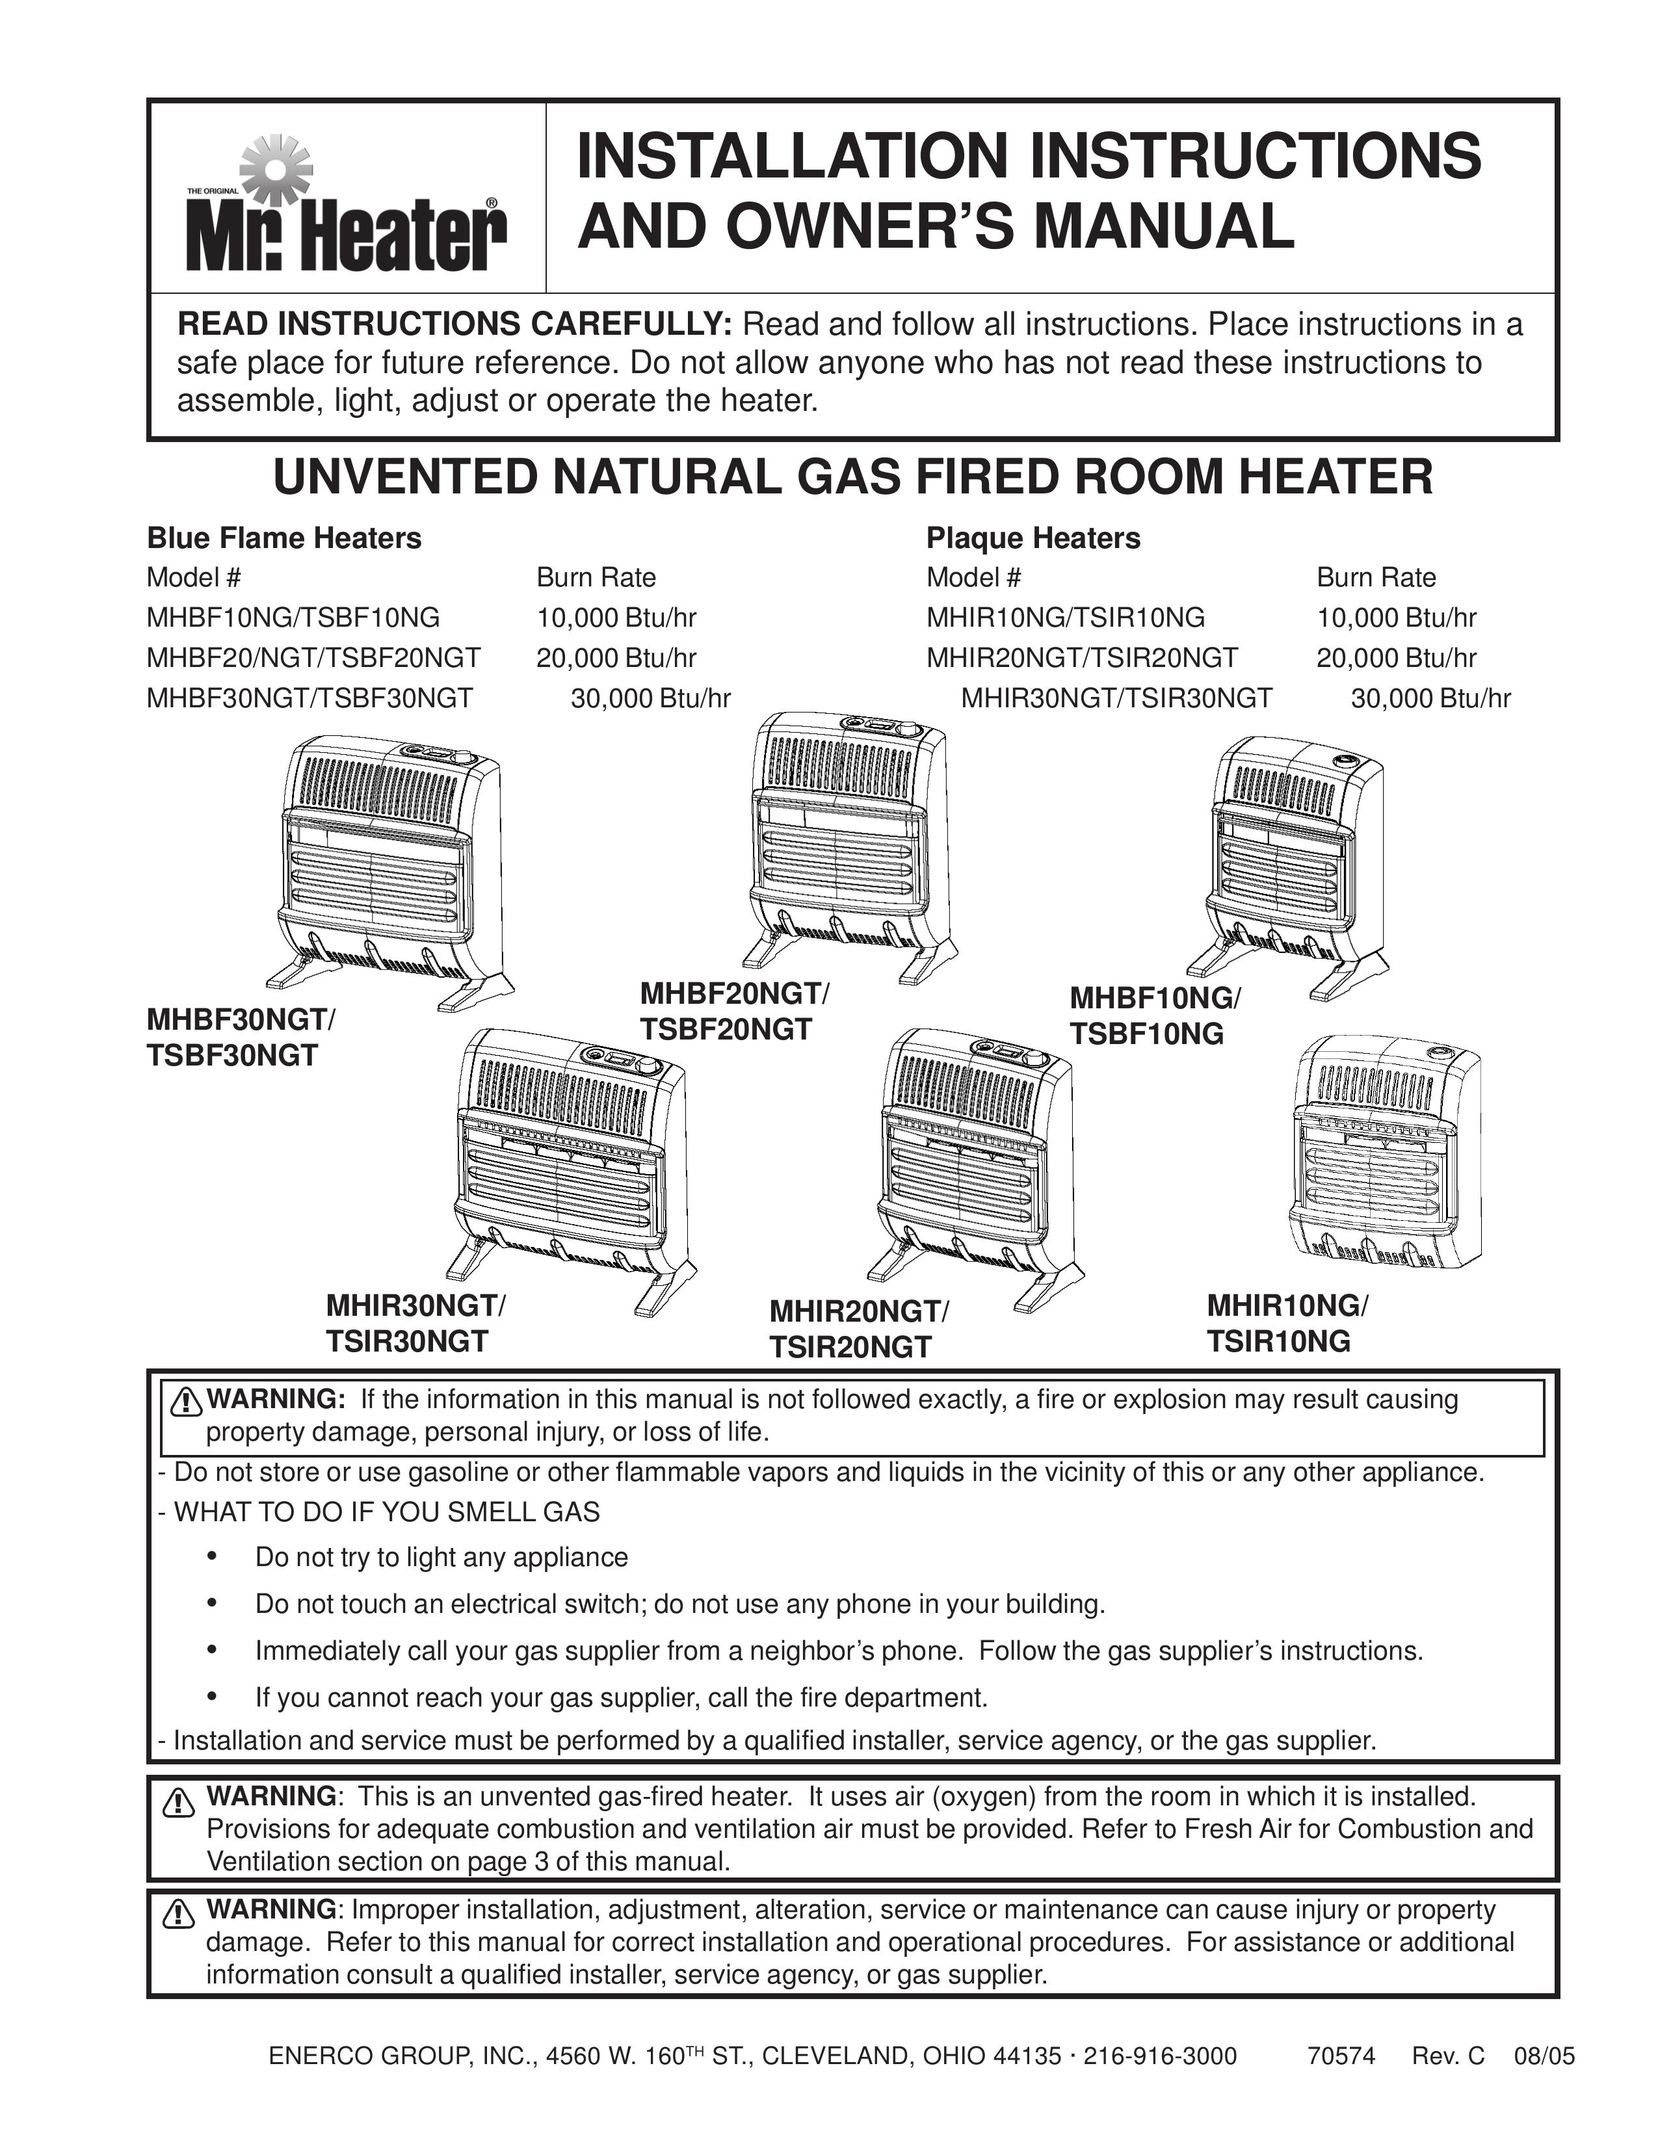 Enerco MHBF30NGT Water Heater User Manual